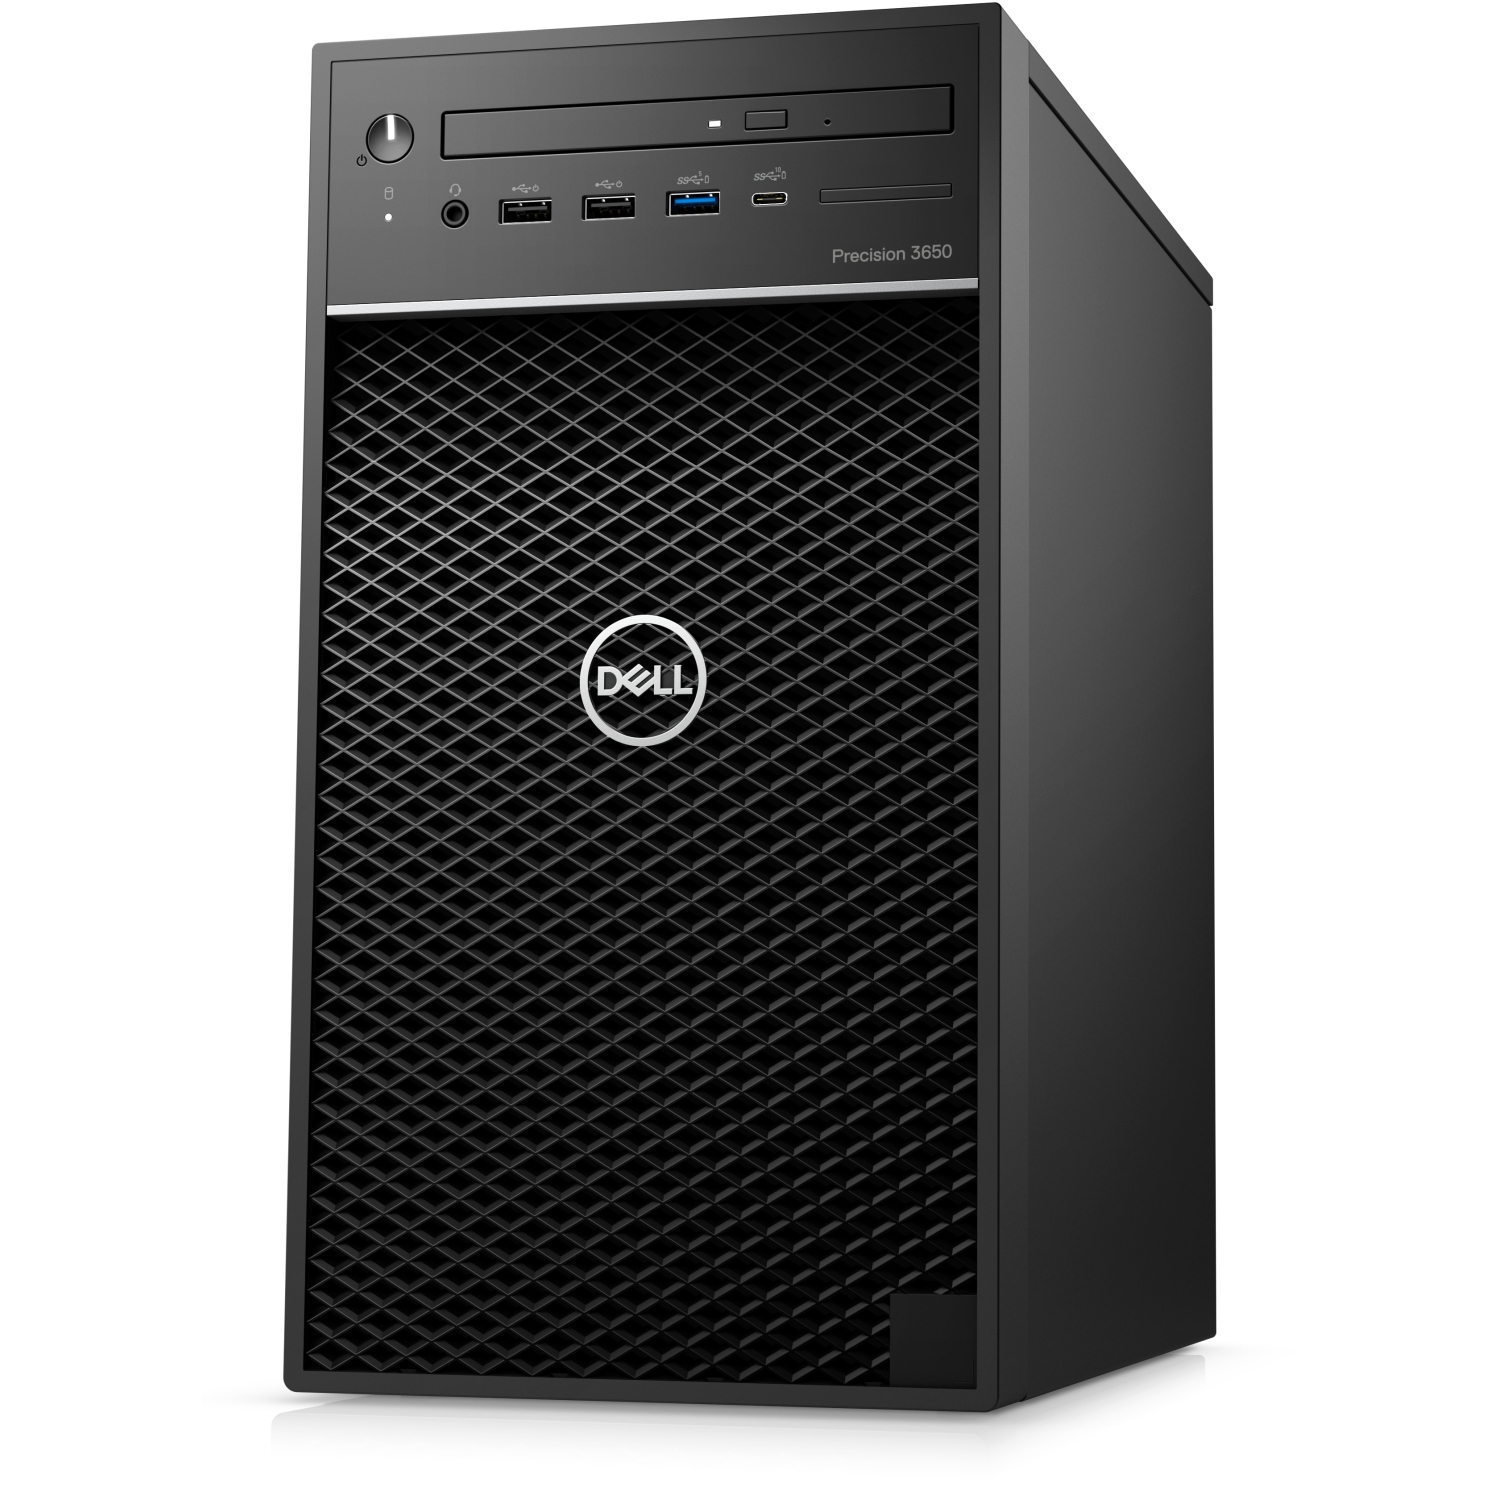 Refurbished (Excellent) - Dell Precision T3650 Workstation Desktop (2021), Core i9, 512GB SSD, 16GB RAM, Quadro 4000, 8 Cores @ 5.3 GHz, 11th Gen CPU Certified